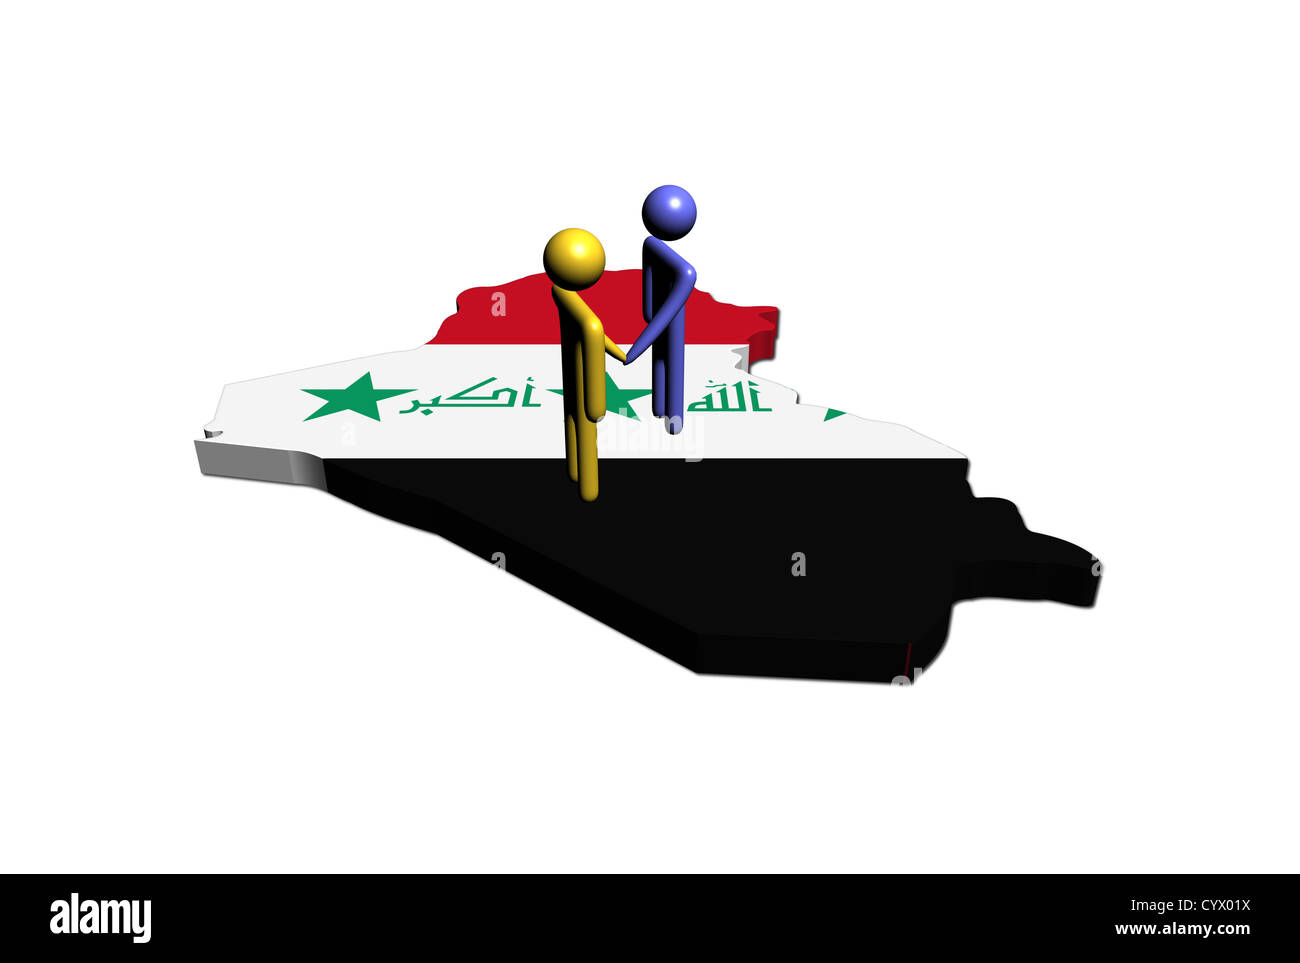 Meeting on Iraq map flag illustration Stock Photo